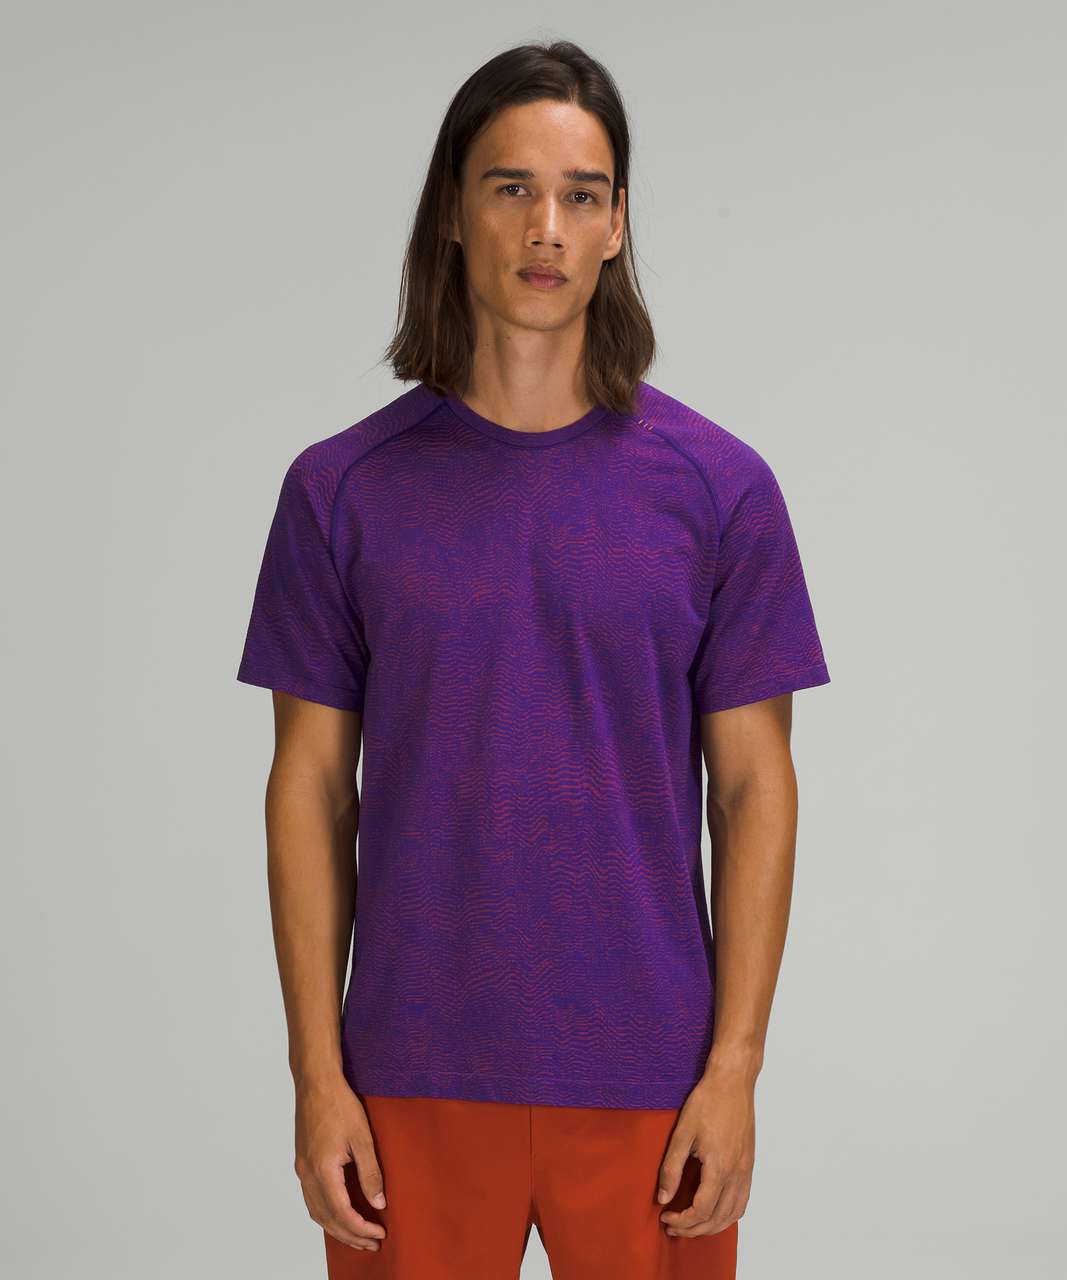 Lululemon Metal Vent Tech Short Sleeve Shirt 2.0 - Ripple Wave Autumn Red / Petrol Purple